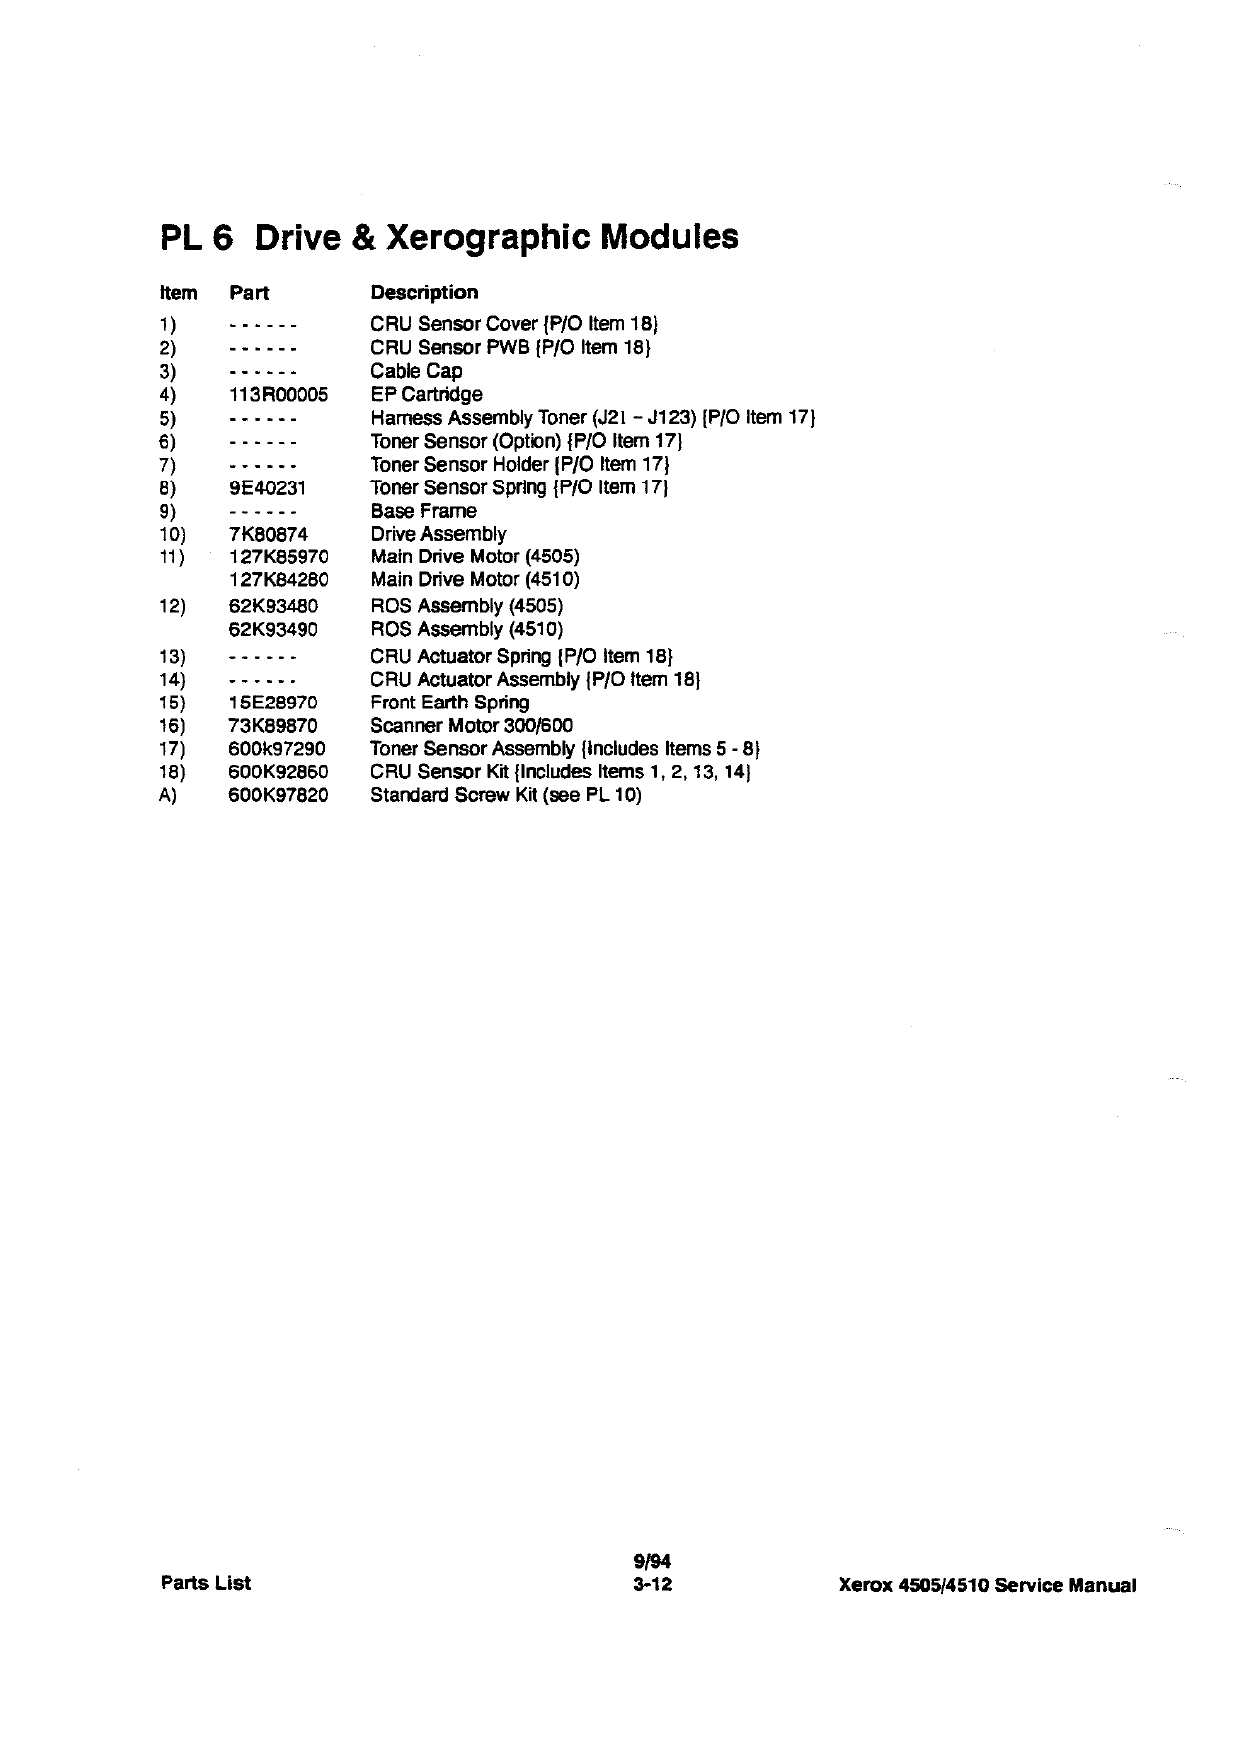 Xerox DocuPrint 4505 4510 Parts List and Service Manual-2